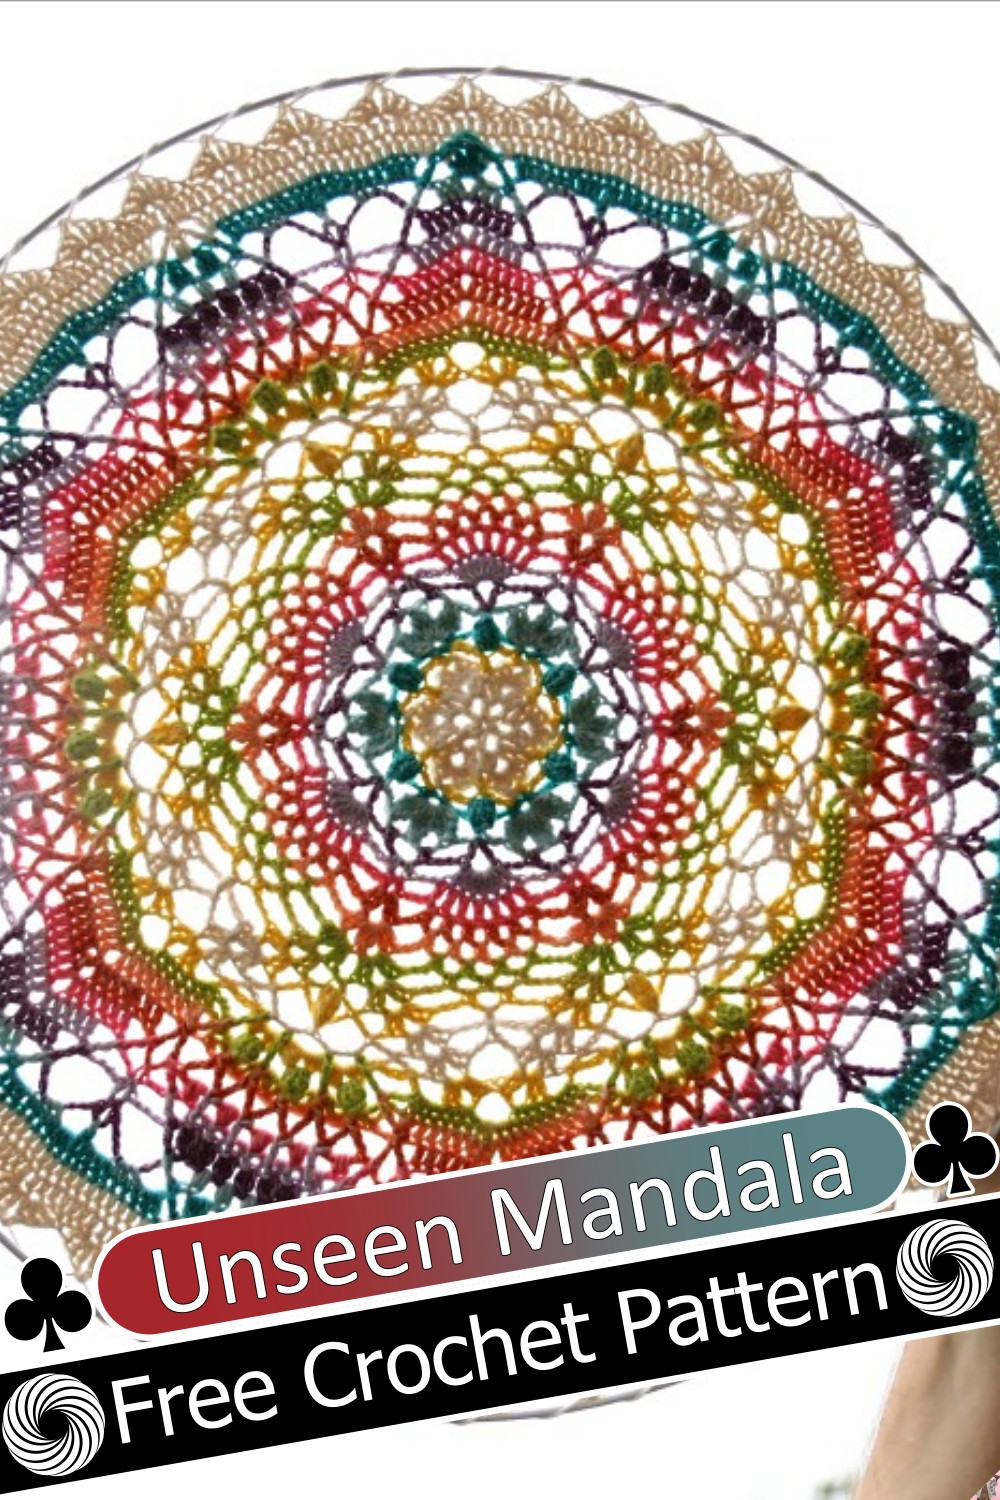 Unseen Mandala